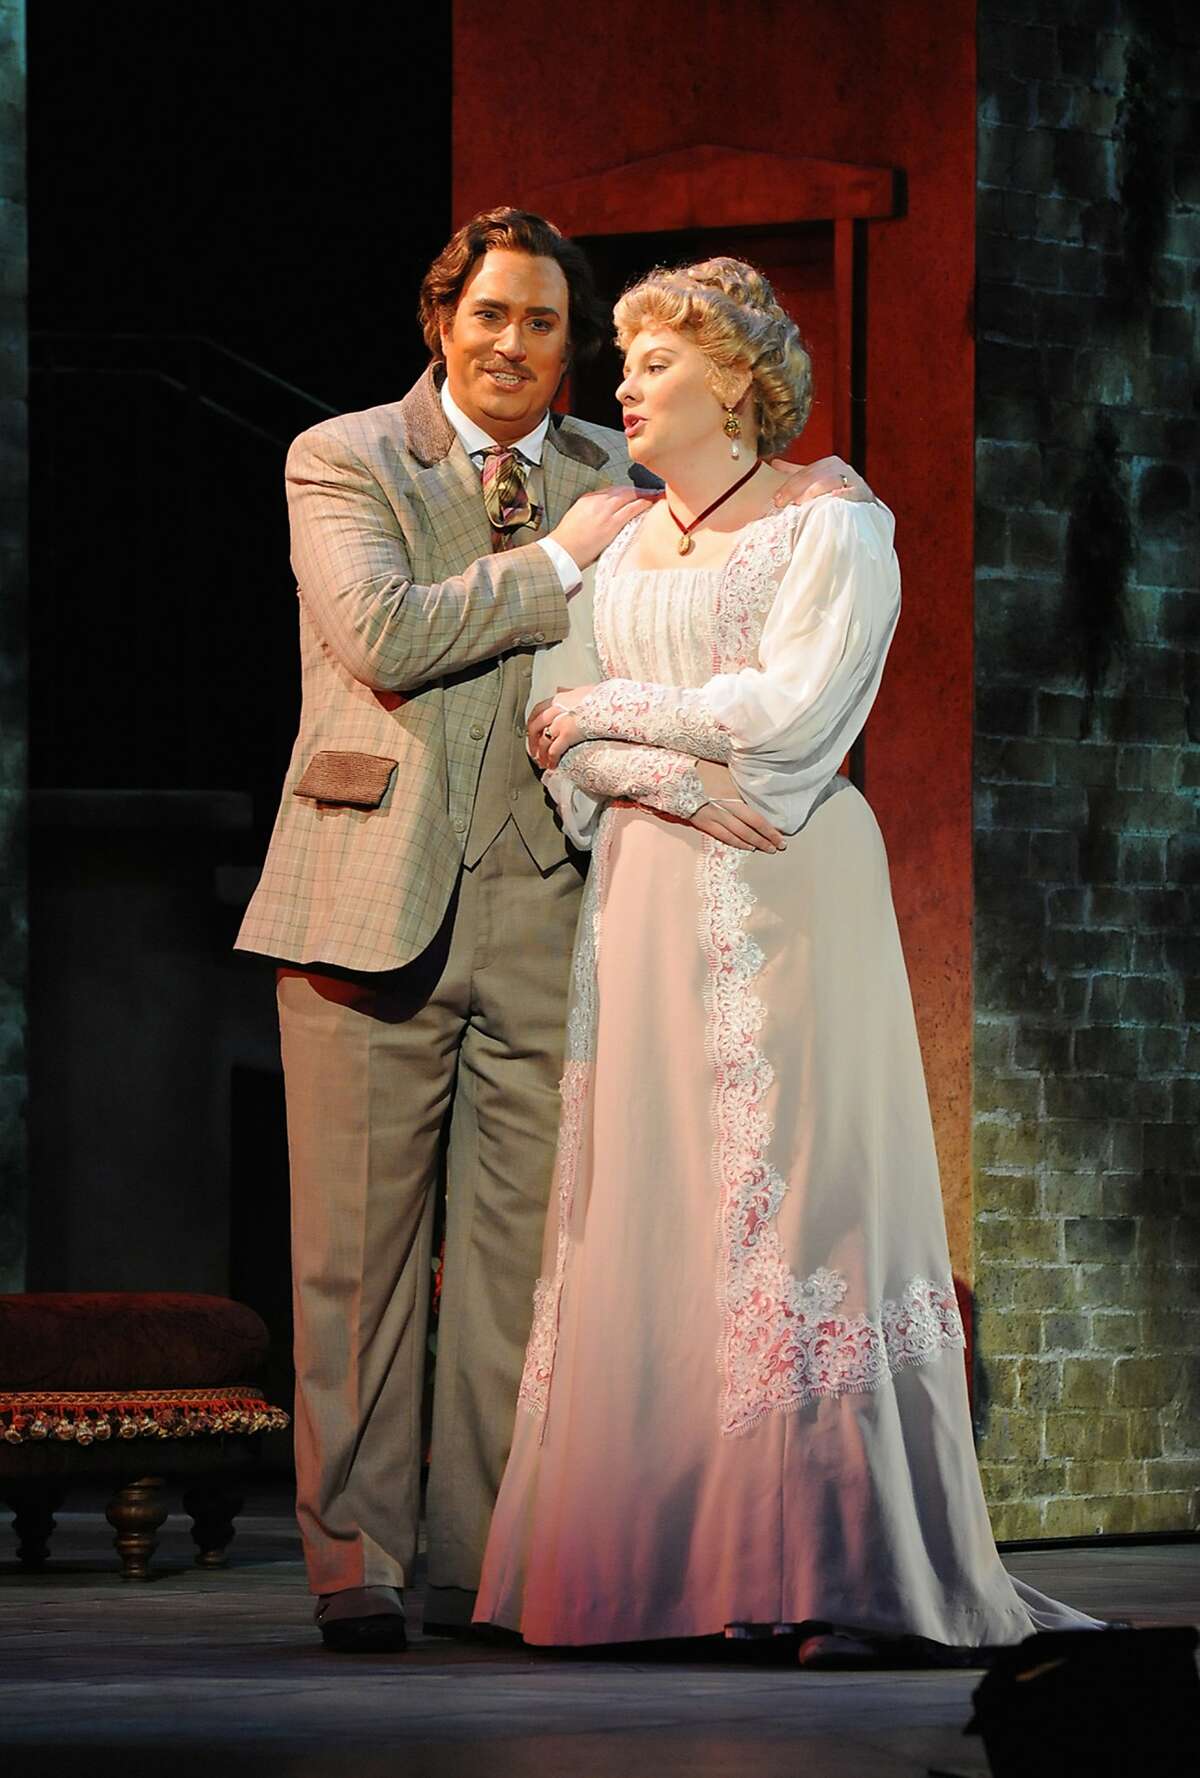 Matthew Hanscom (l.) as Gino Carella and Isabella Ivy as Lilia Herriton in "Where Angels Fear to Tread" at Opera San Jose